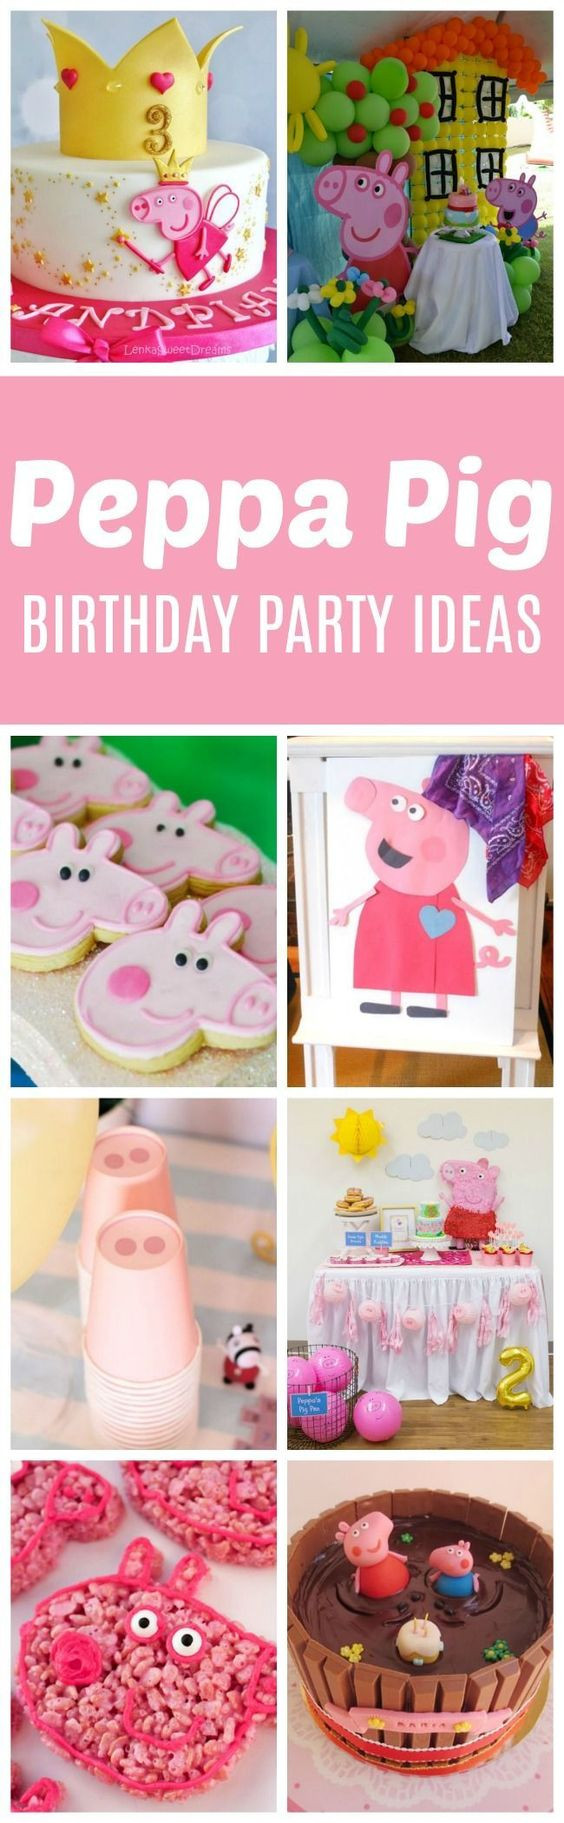 Peppa Pig Birthday Party Decorations
 16 Peppa Pig Birthday Party Ideas Pretty My Party